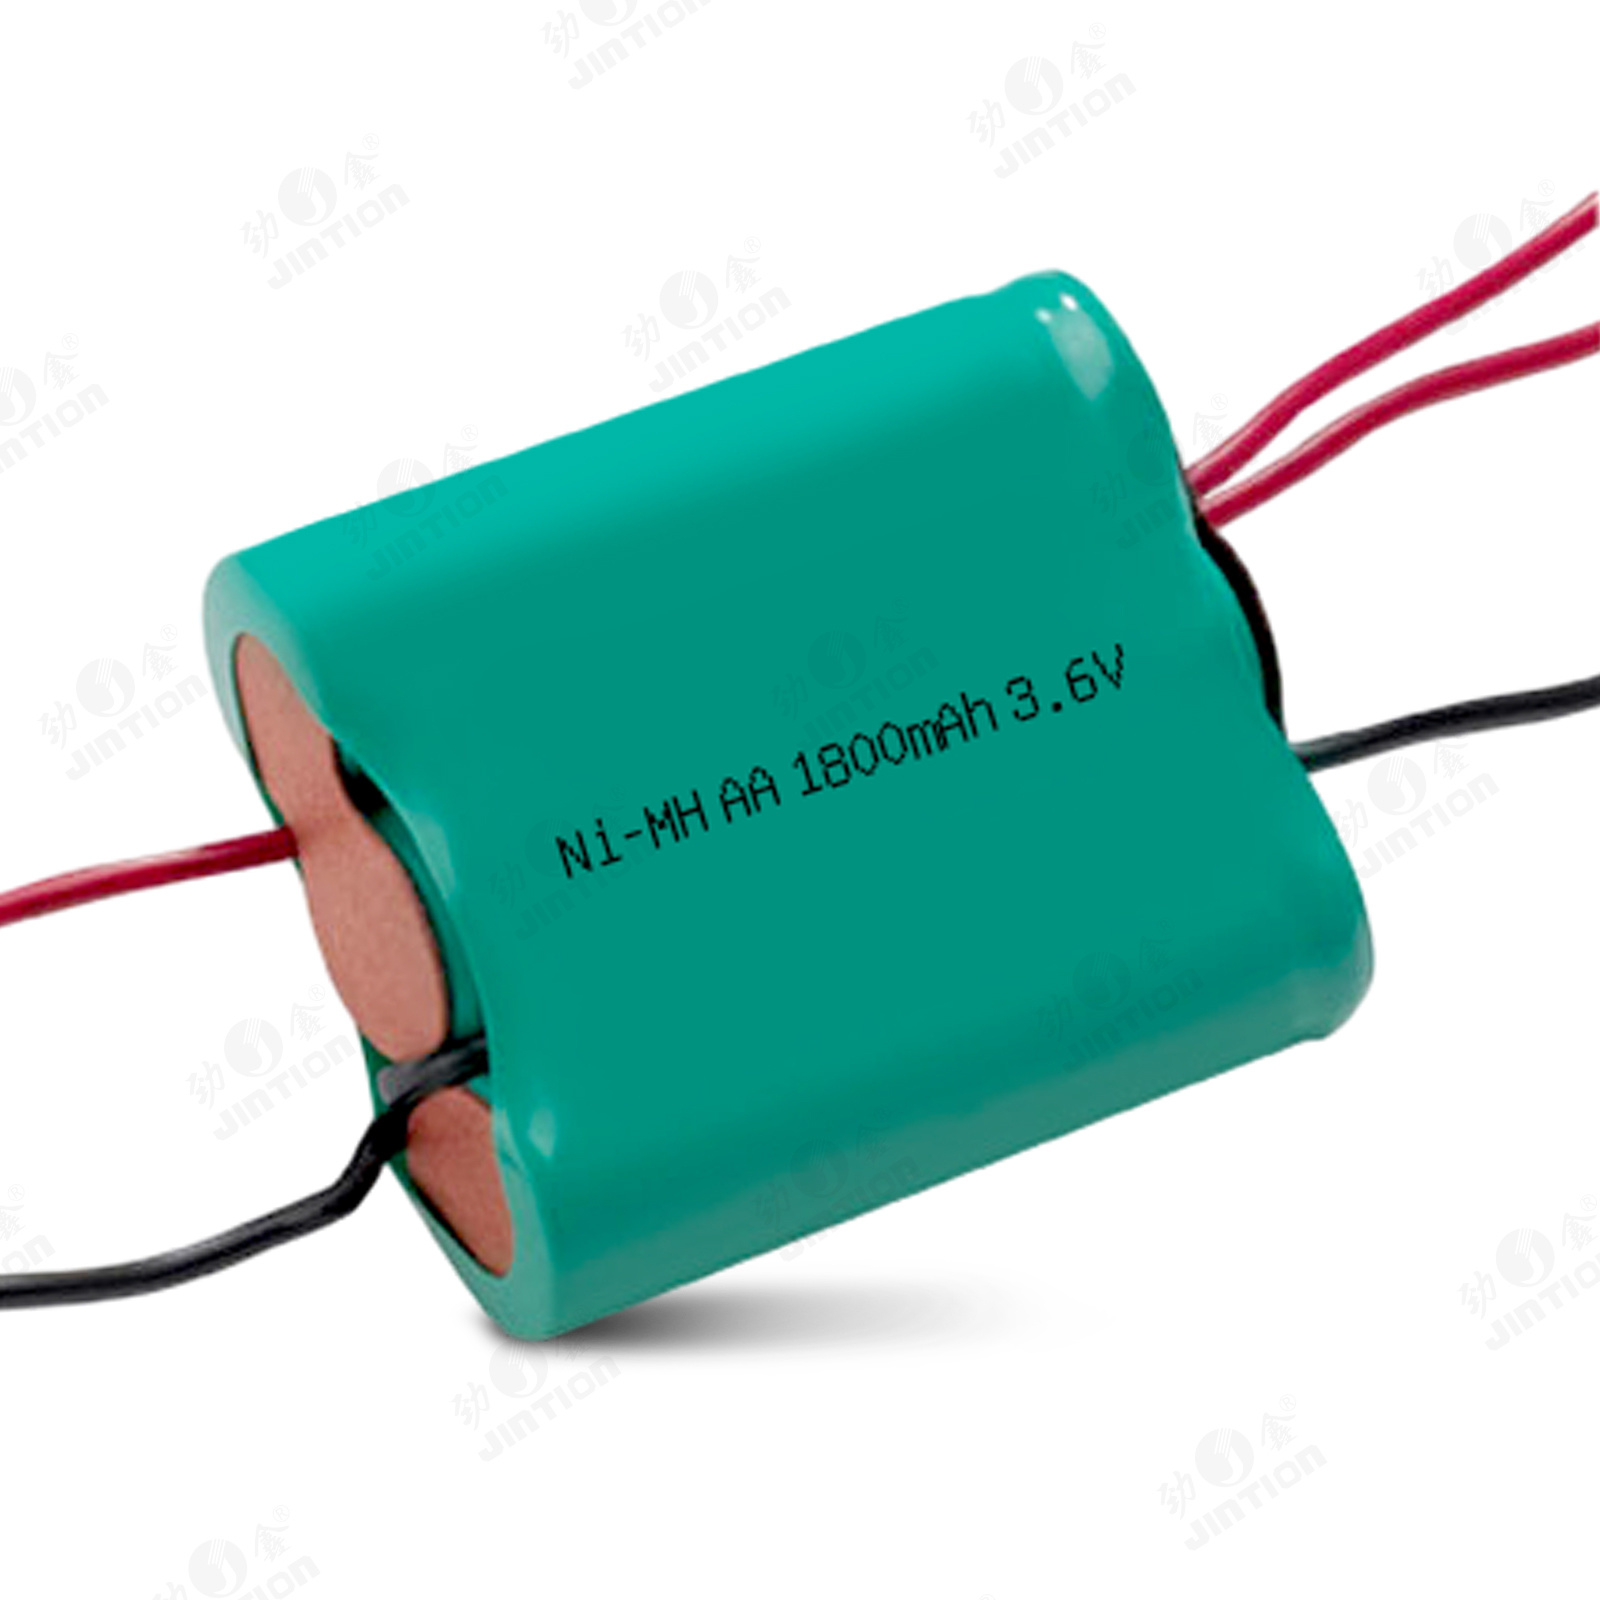 JINTION NiMh AA 1800mAh 3.6v aa rechargeable battery nimh battery aa 1.2v rechargeable batteries for Power tool